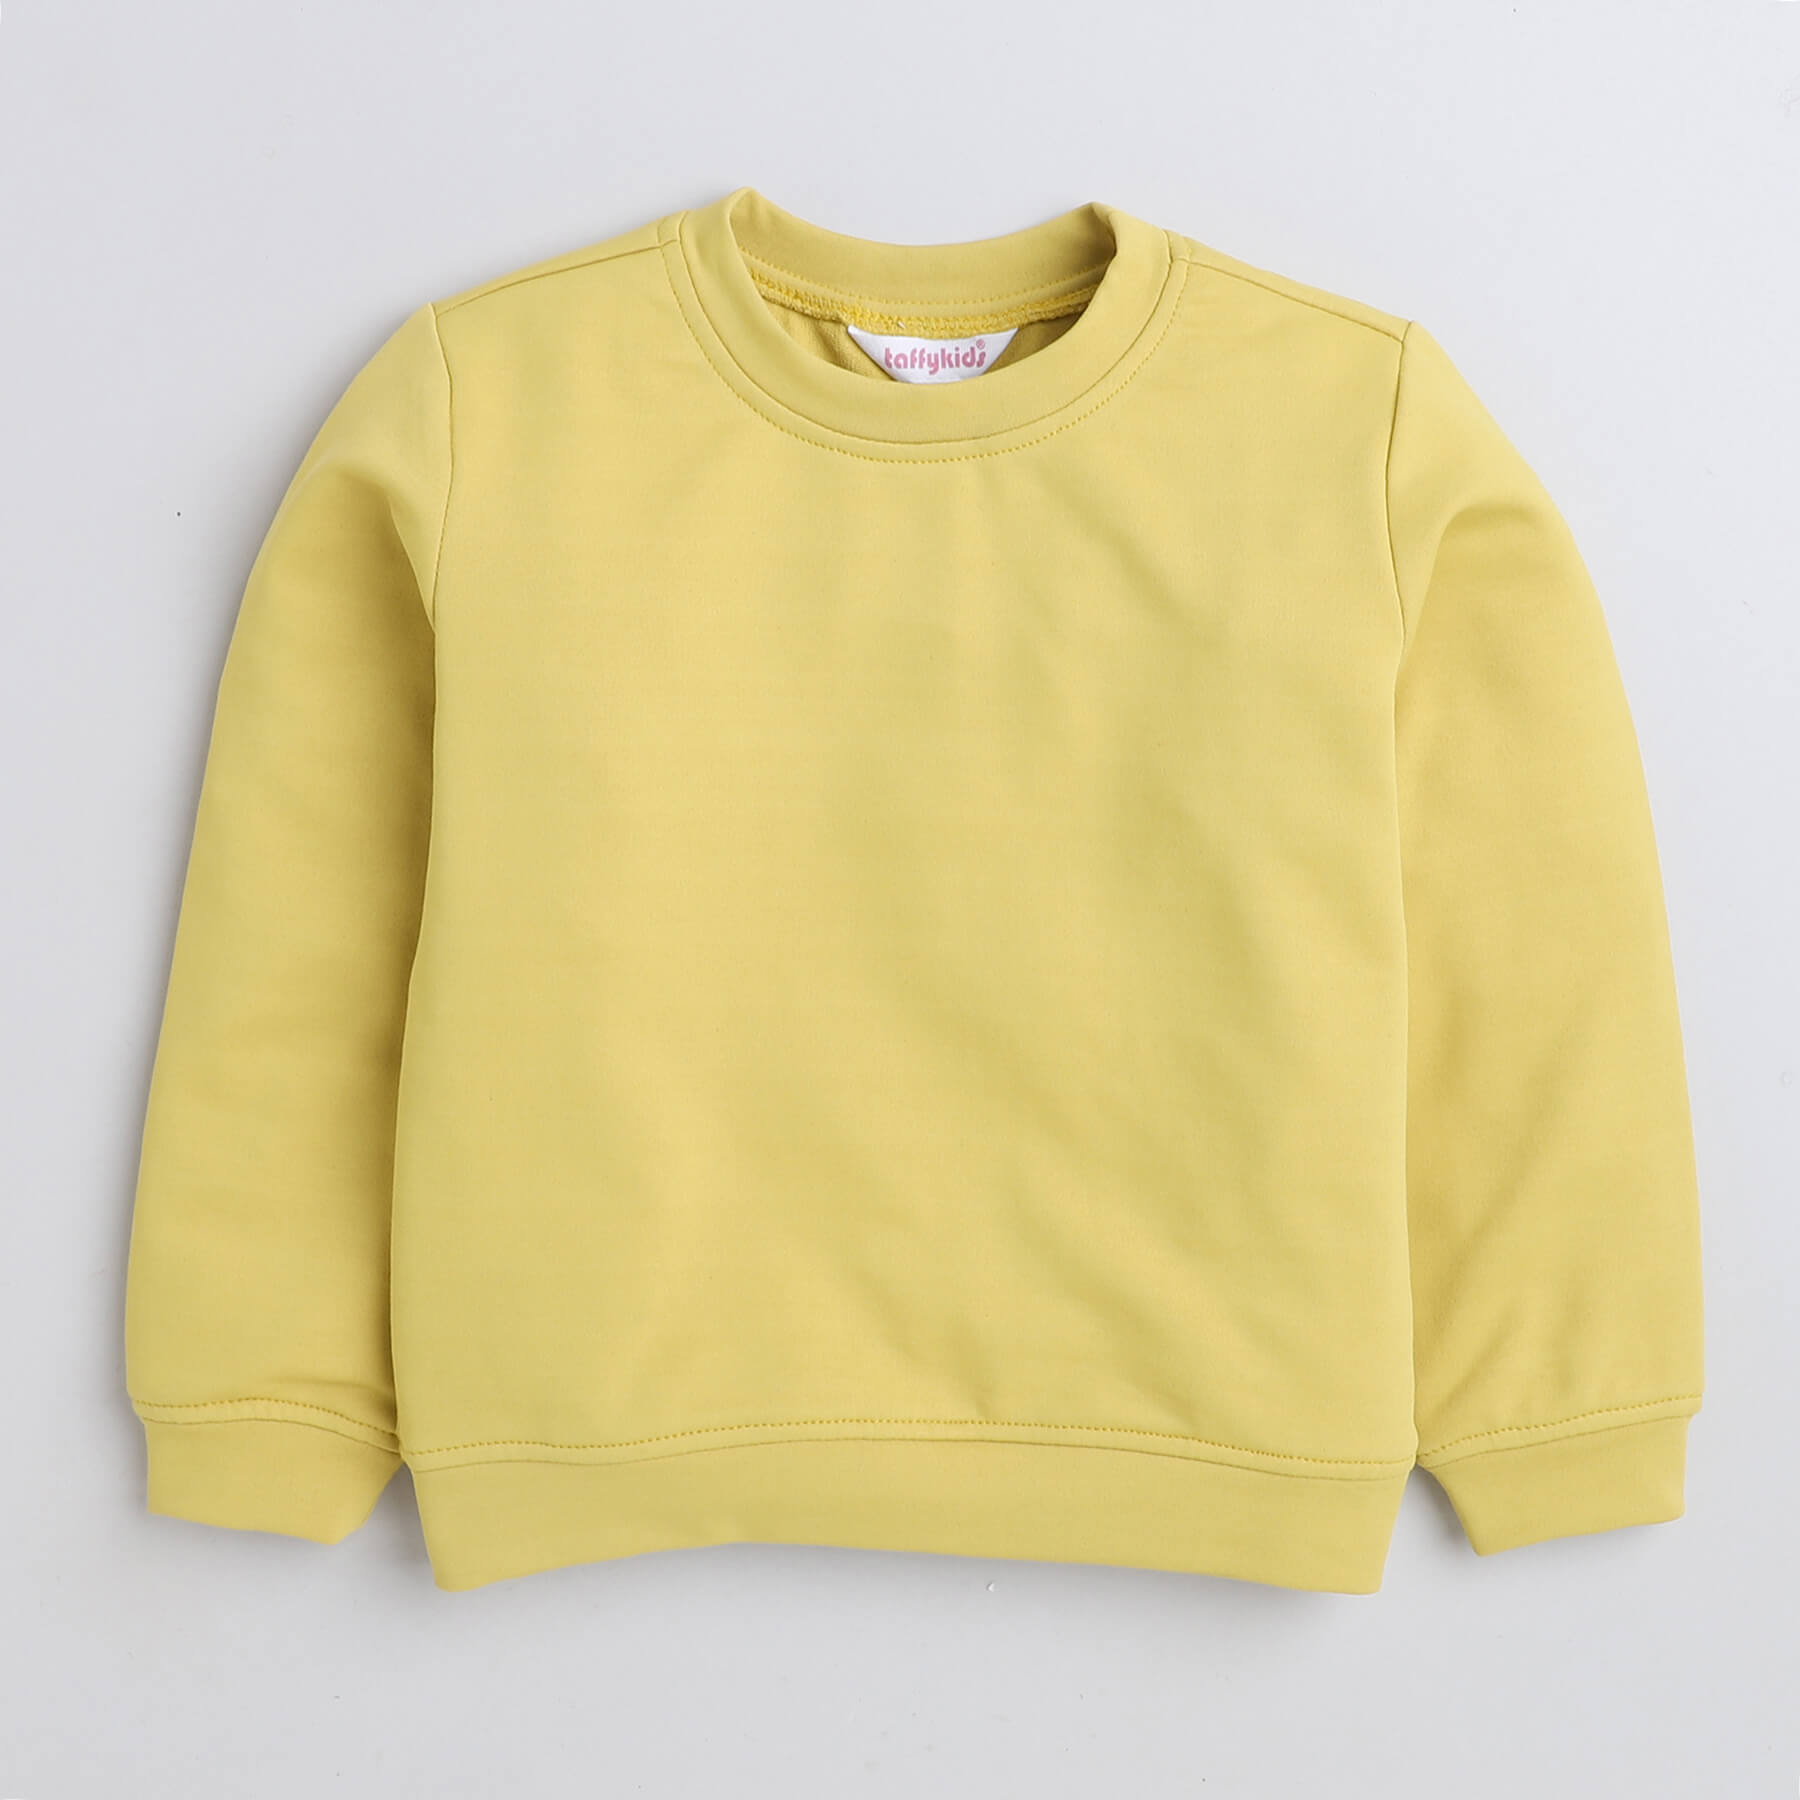 Shop Full Sleeves Solid Sweatshirt-Yellow Online